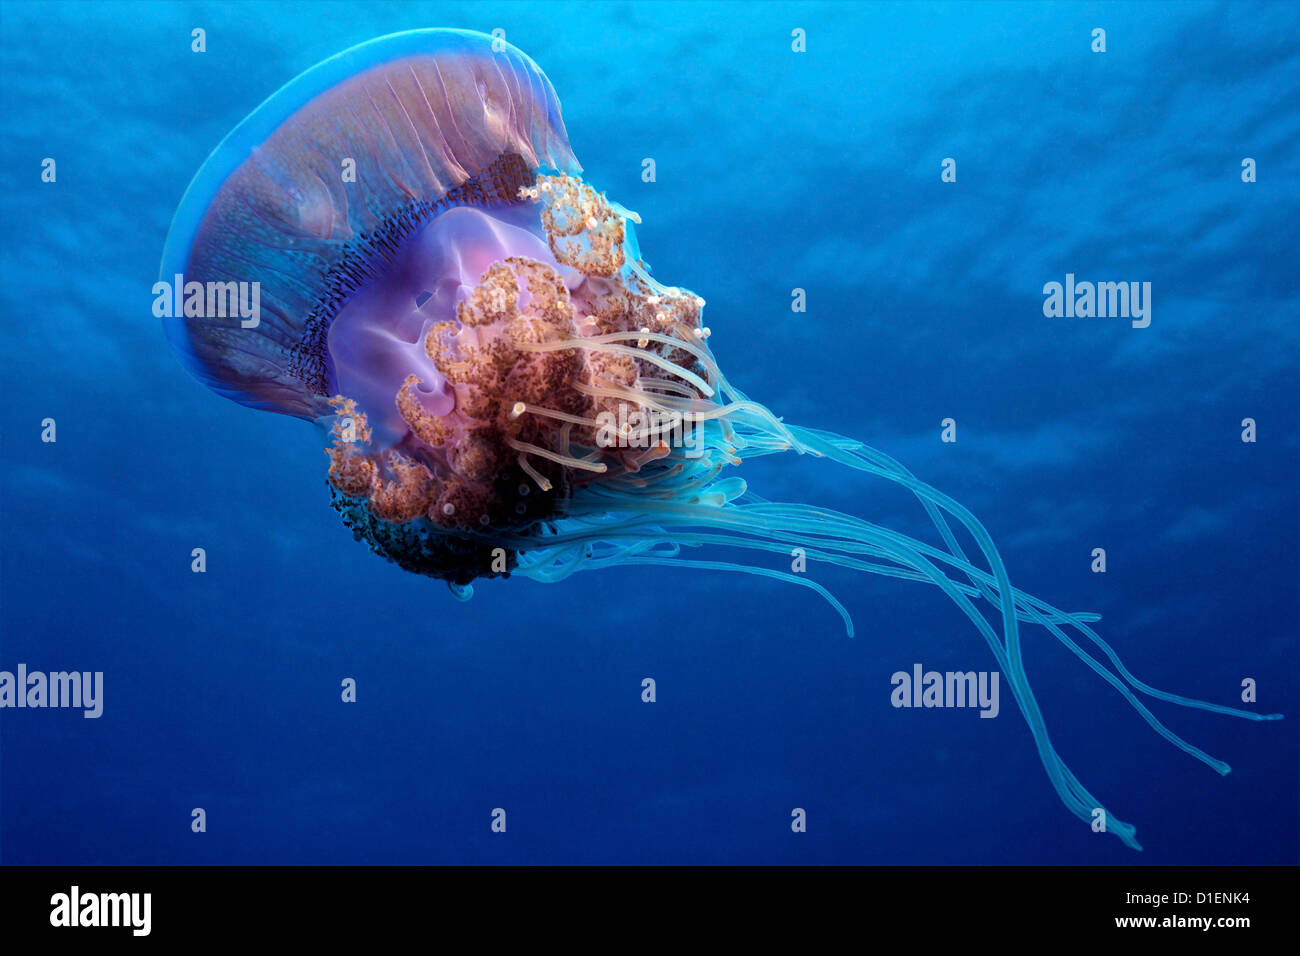 Purple jellyfish swimming in blue water, near Marsa Alam, Egypt, Red Sea, underwater shot Stock Photo